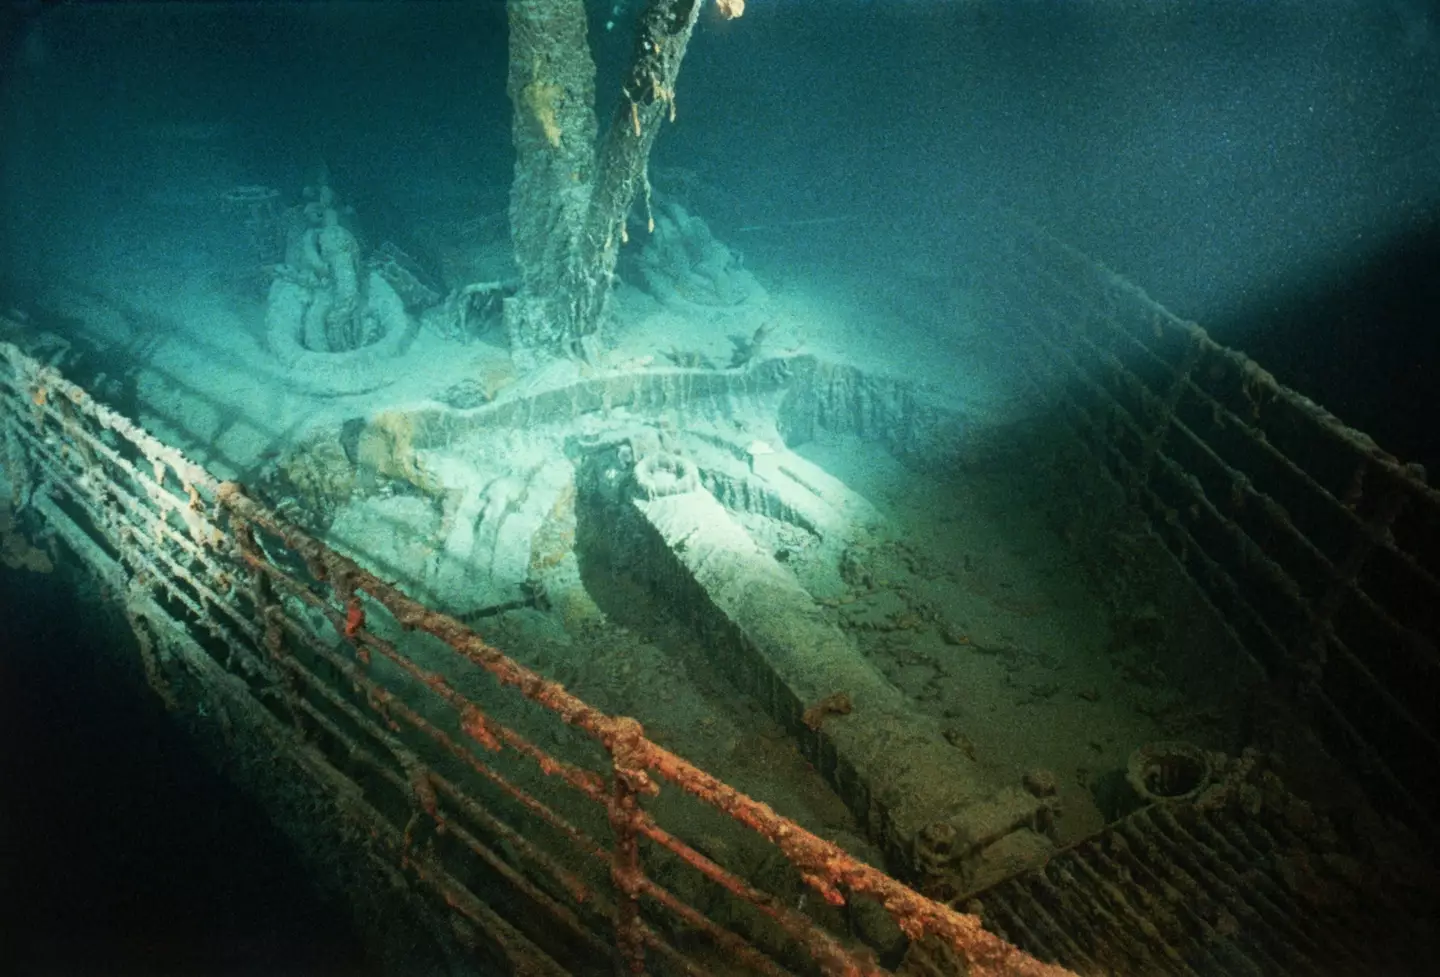 The Titanic sank 111 years ago.